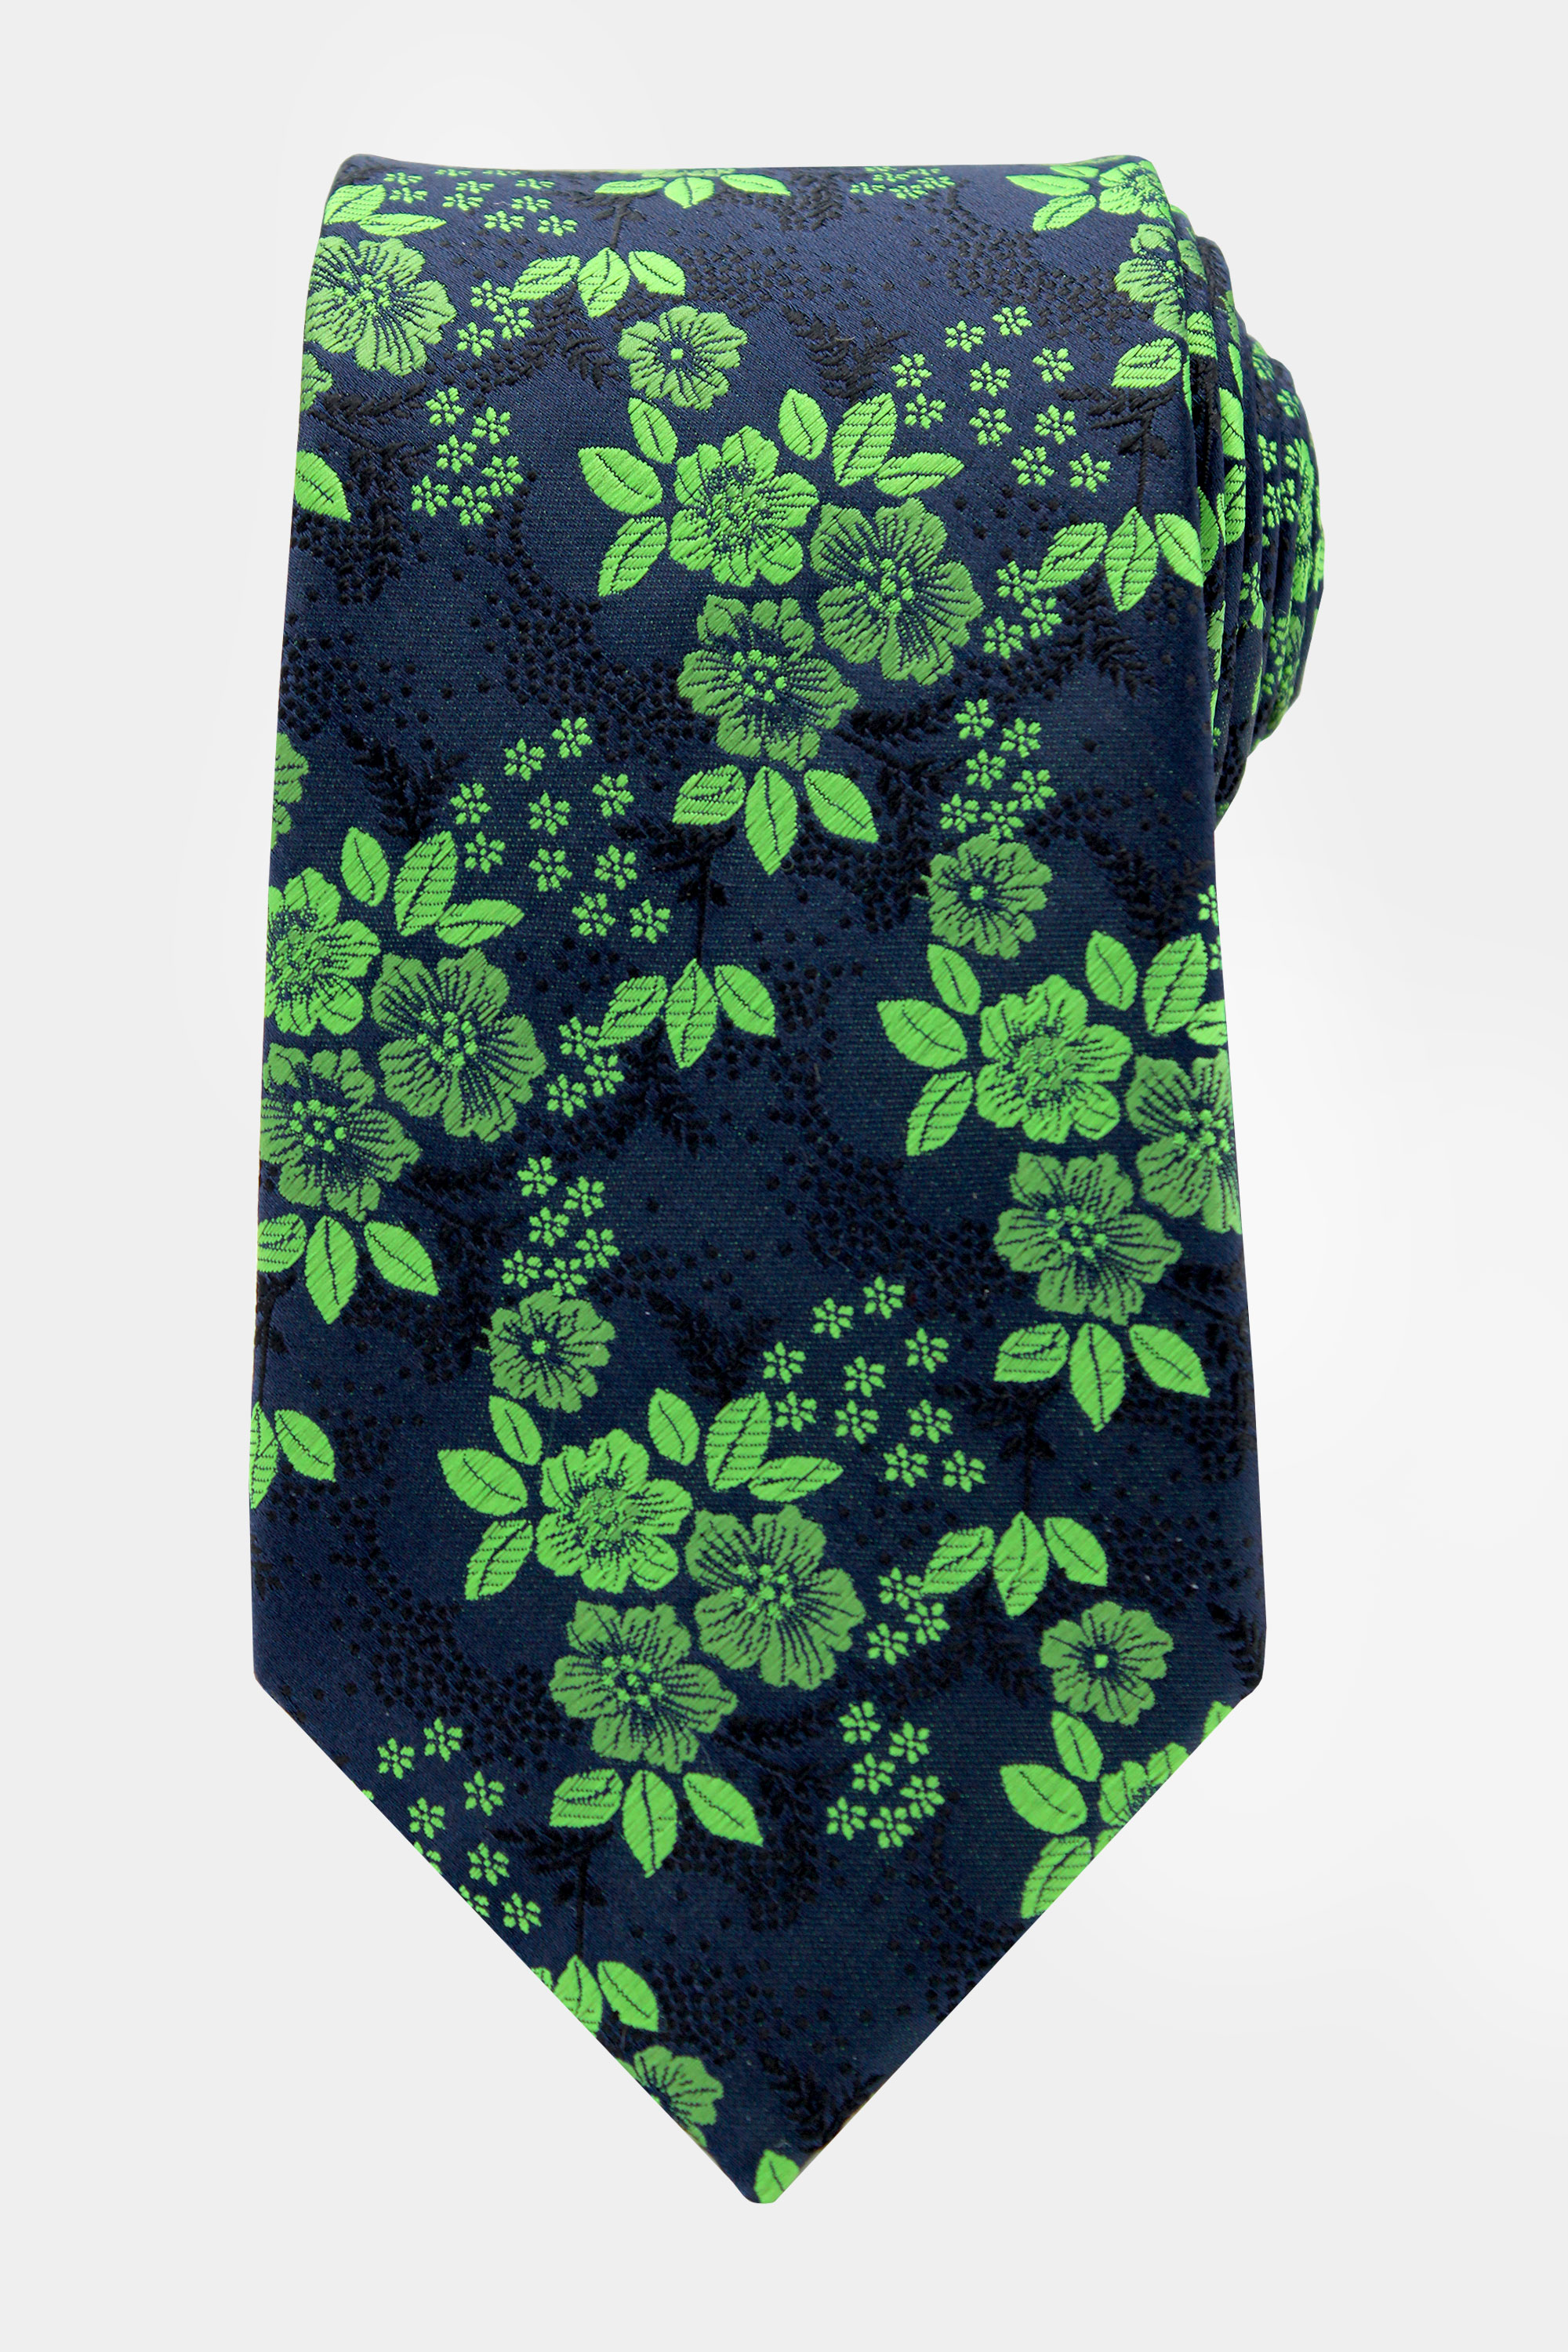 Green-and-Black-Floral-Tie-from-Gentlemansguru.com